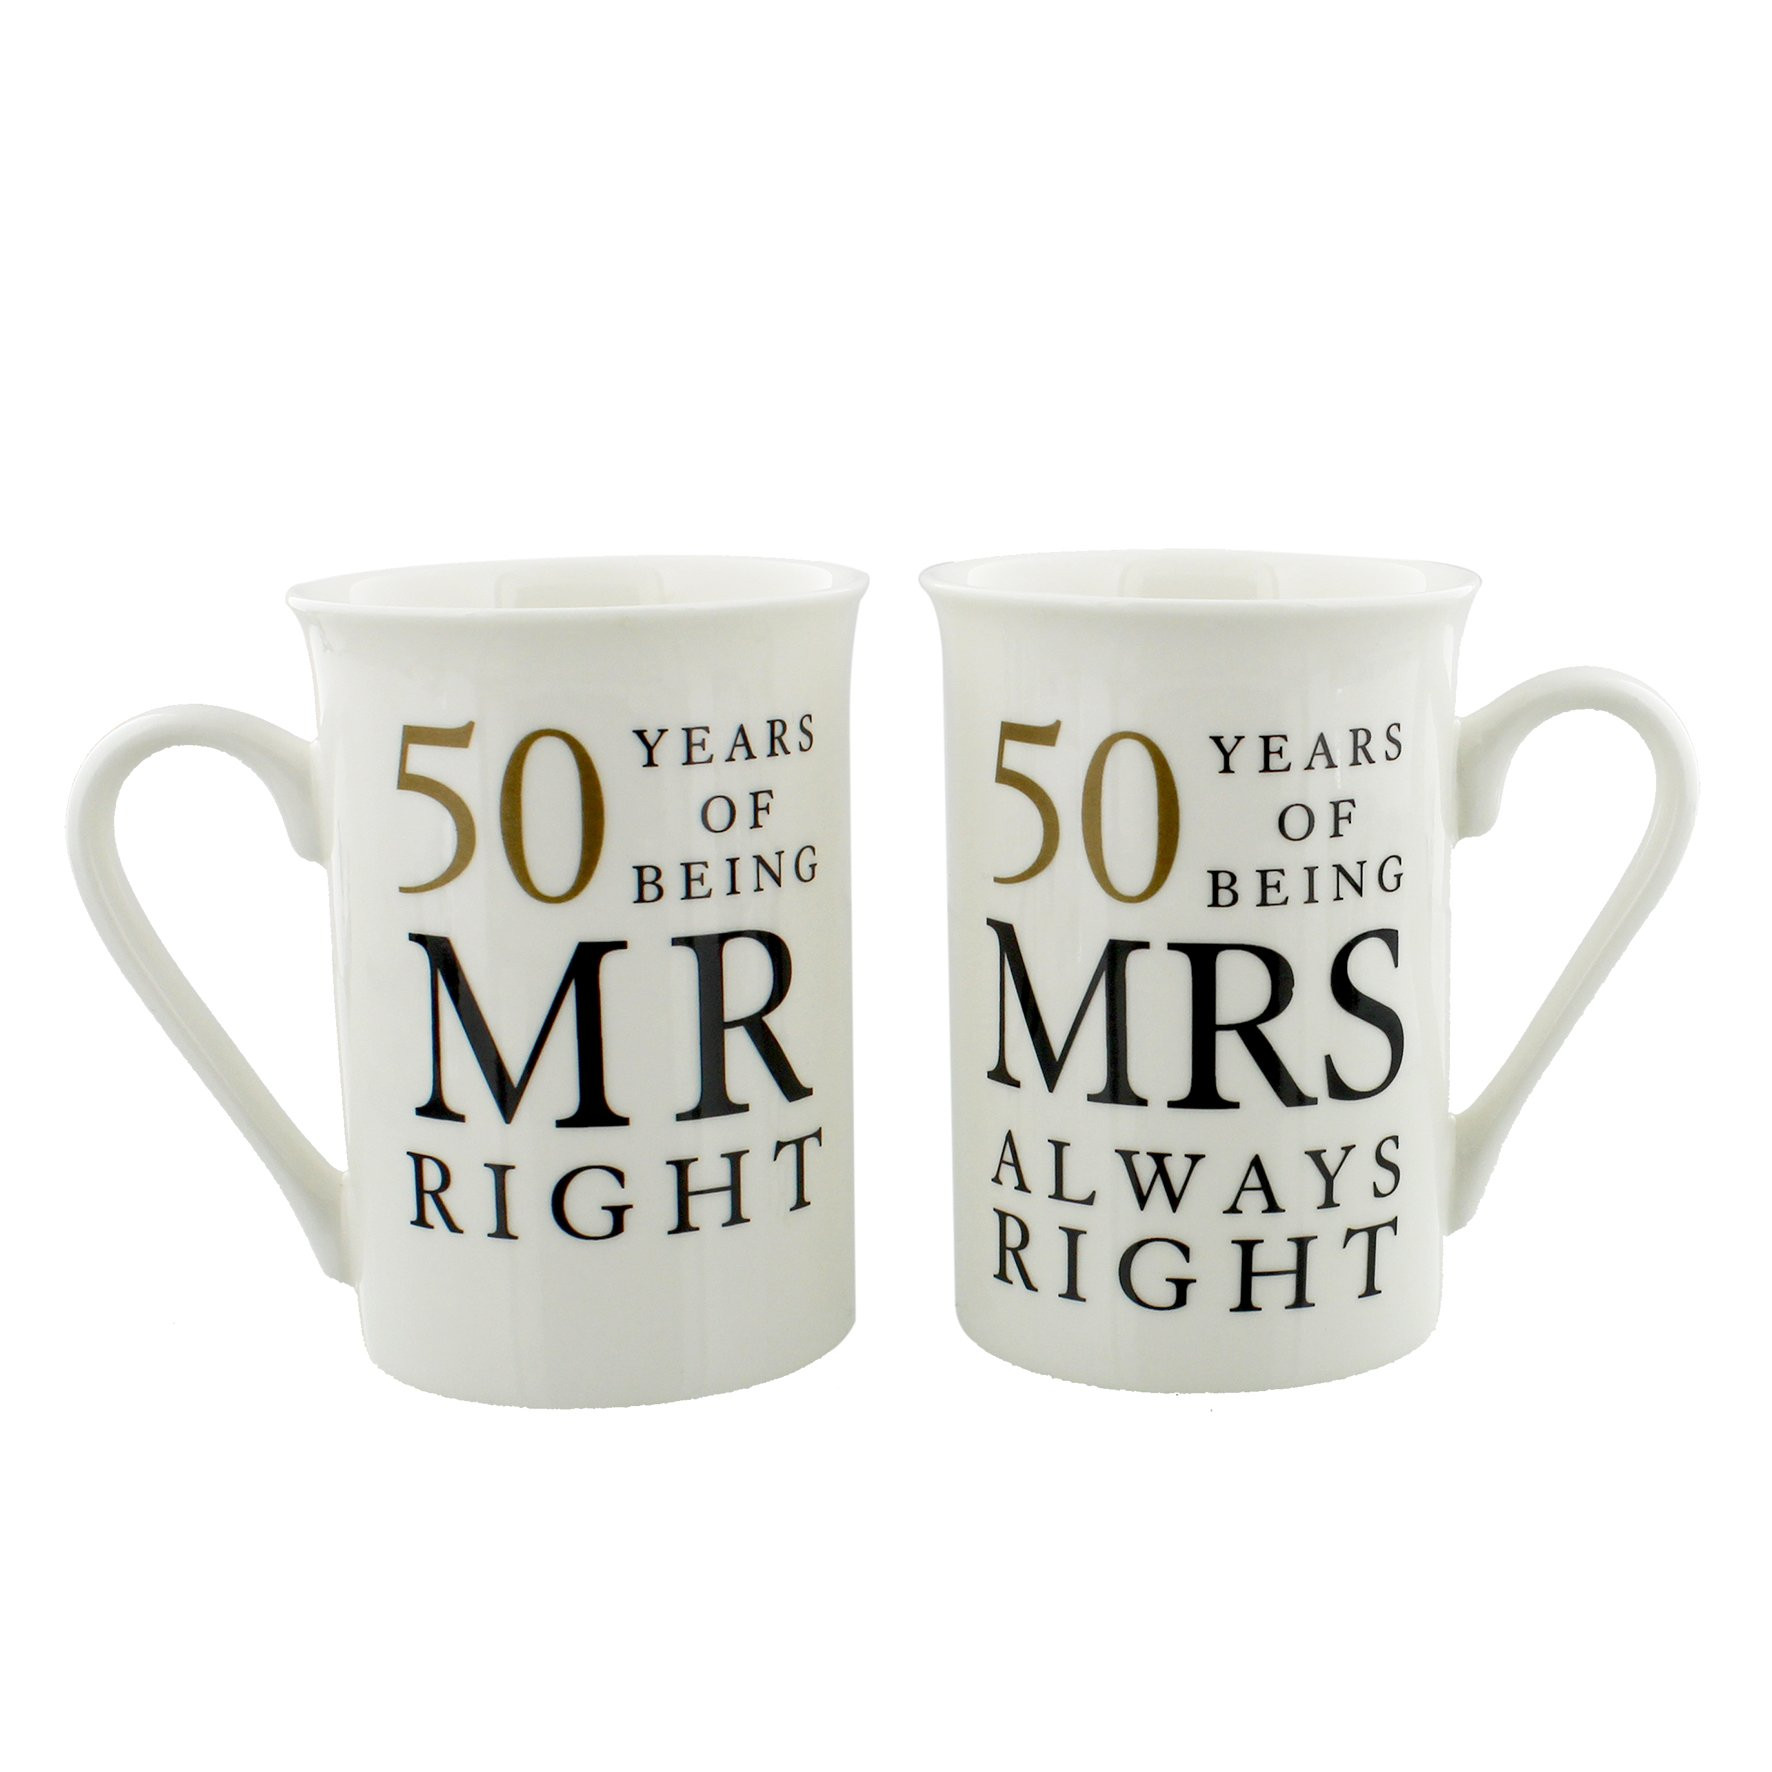 50 Year Anniversary Gift Ideas
 50th Anniversary Gift Set Two China Mugs Mr Right and Mrs